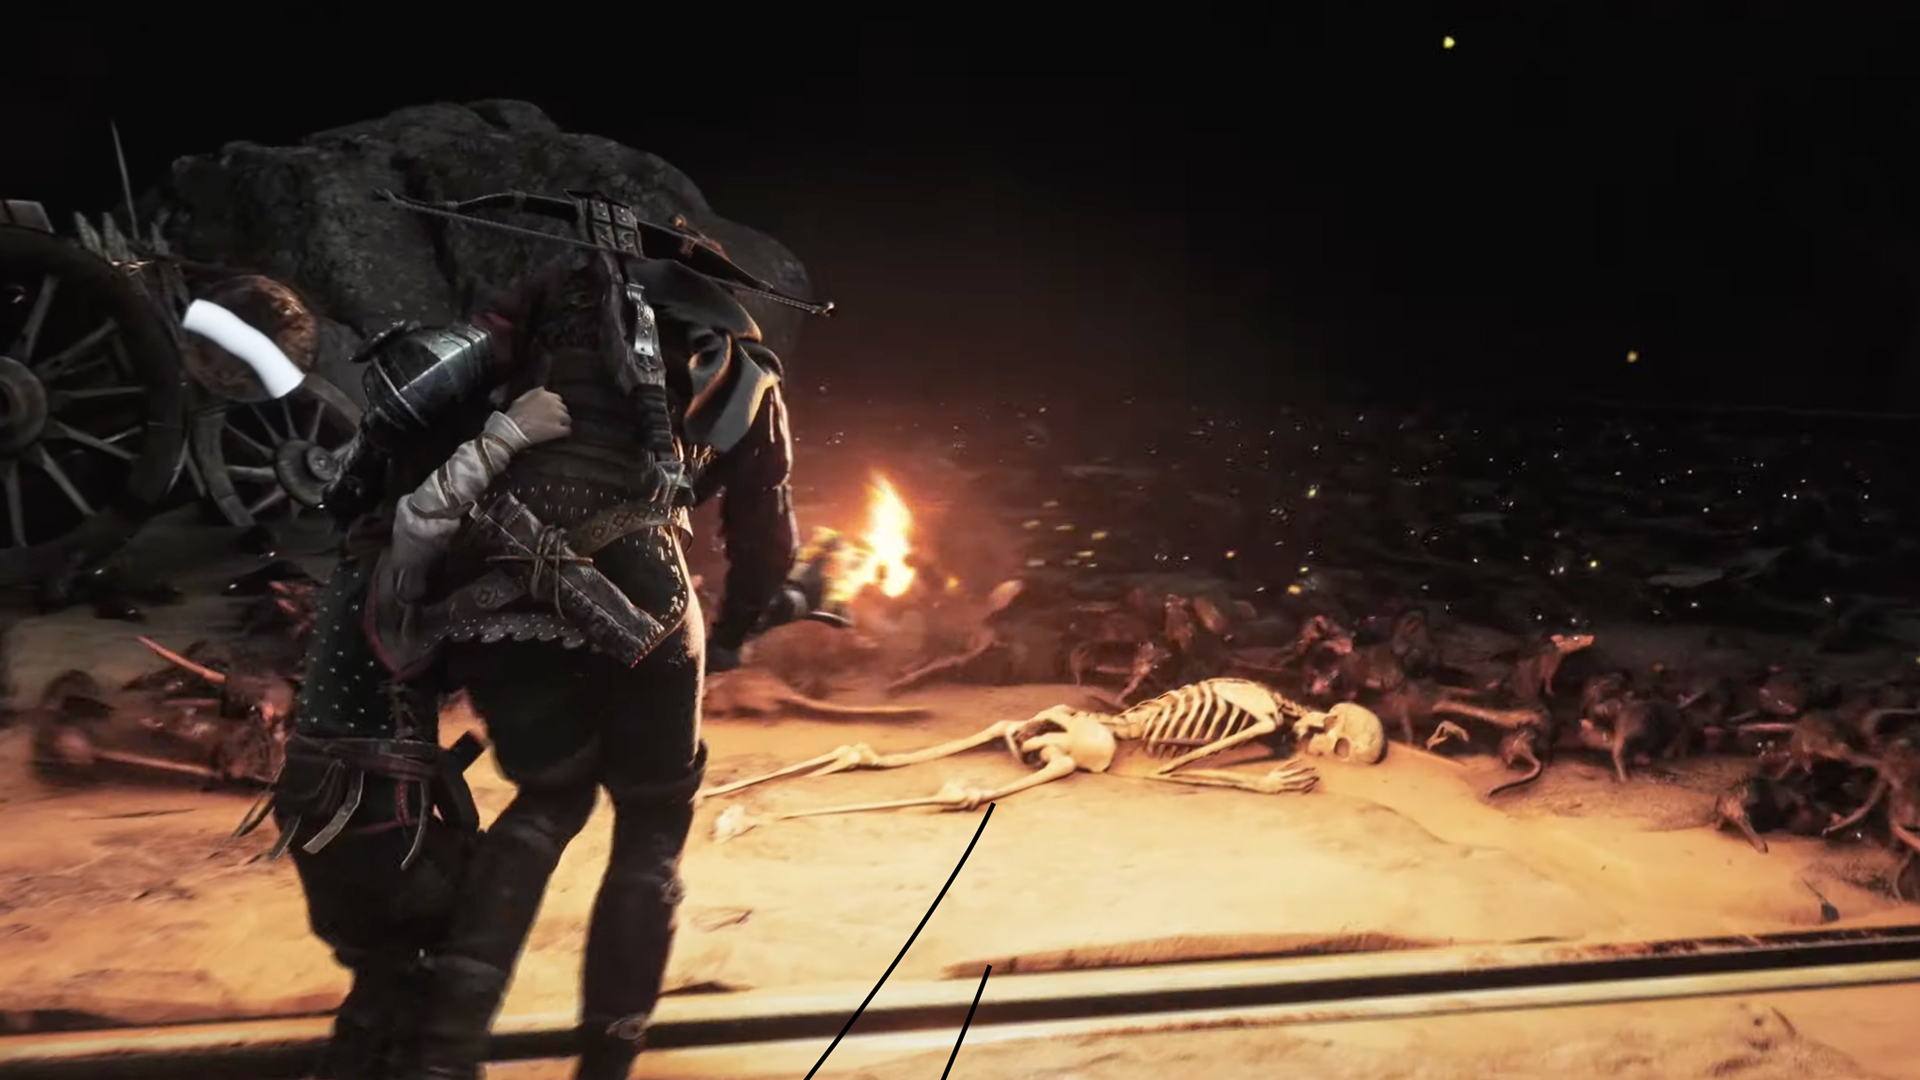 A Plague Tale: Requiem - Gameplay Reveal Trailer